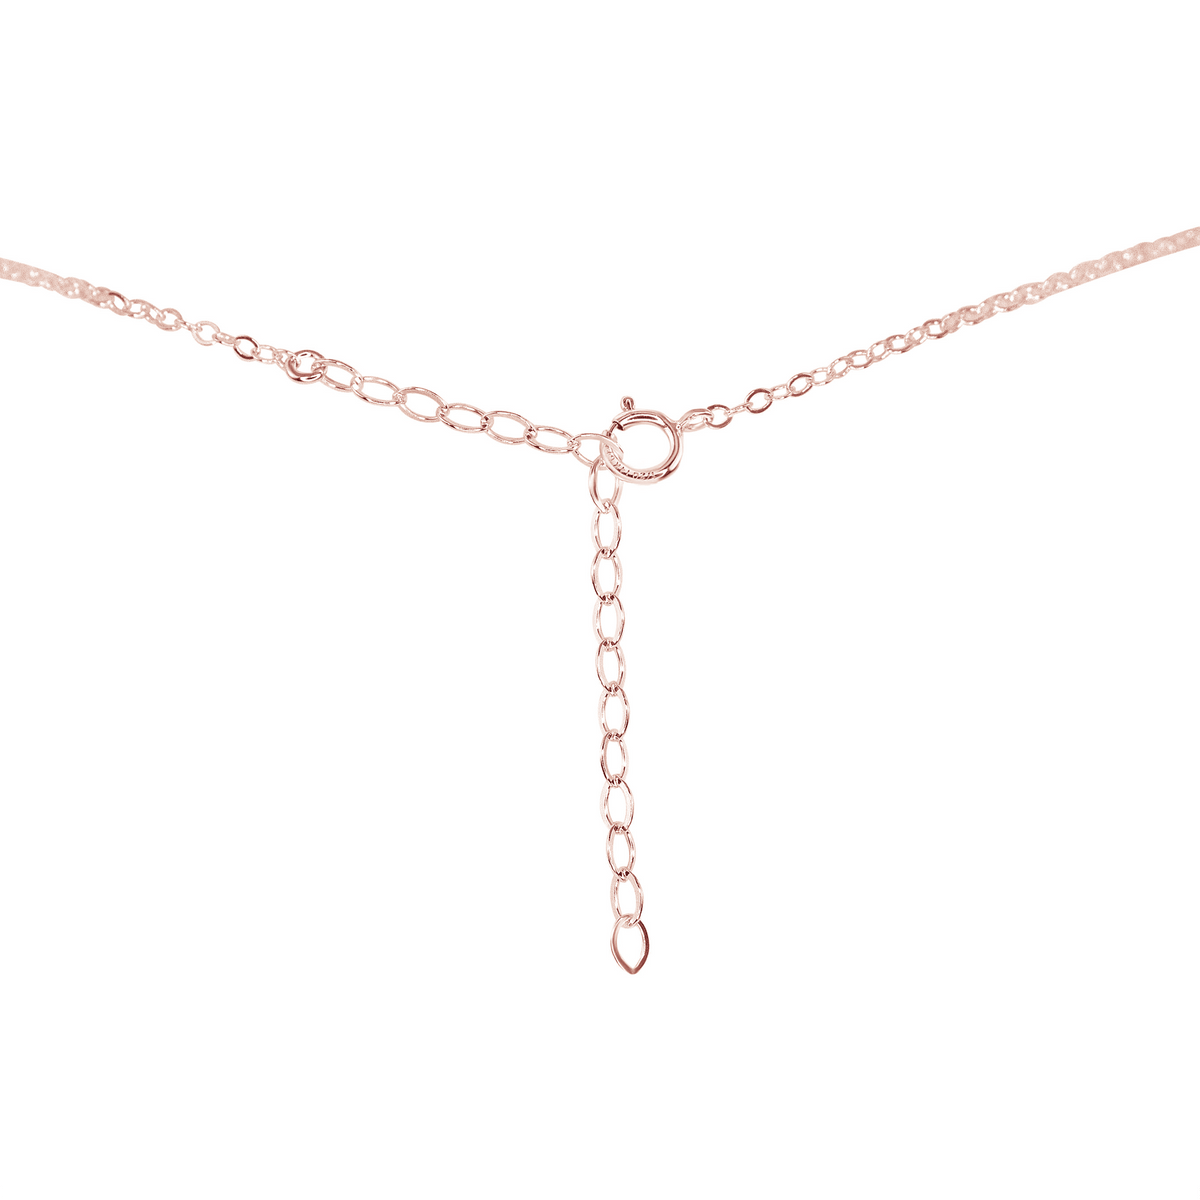 Carnelian Boho Lariat Necklace - Carnelian Boho Lariat Necklace - 14k Gold Fill - Luna Tide Handmade Crystal Jewellery